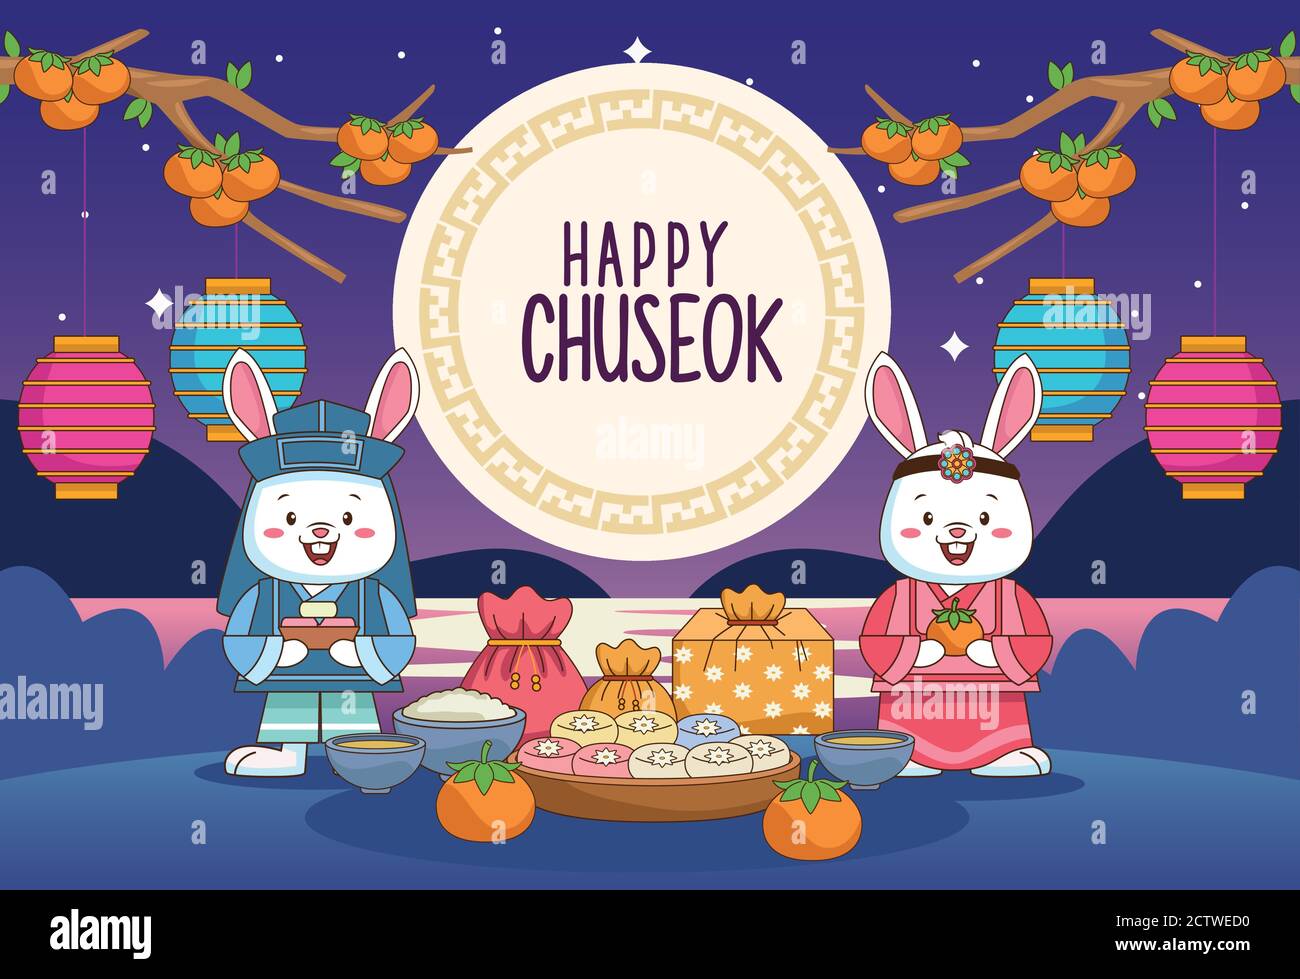 happy chuseok celebration with rabbits couple and food scene vector illustration design Stock Vector